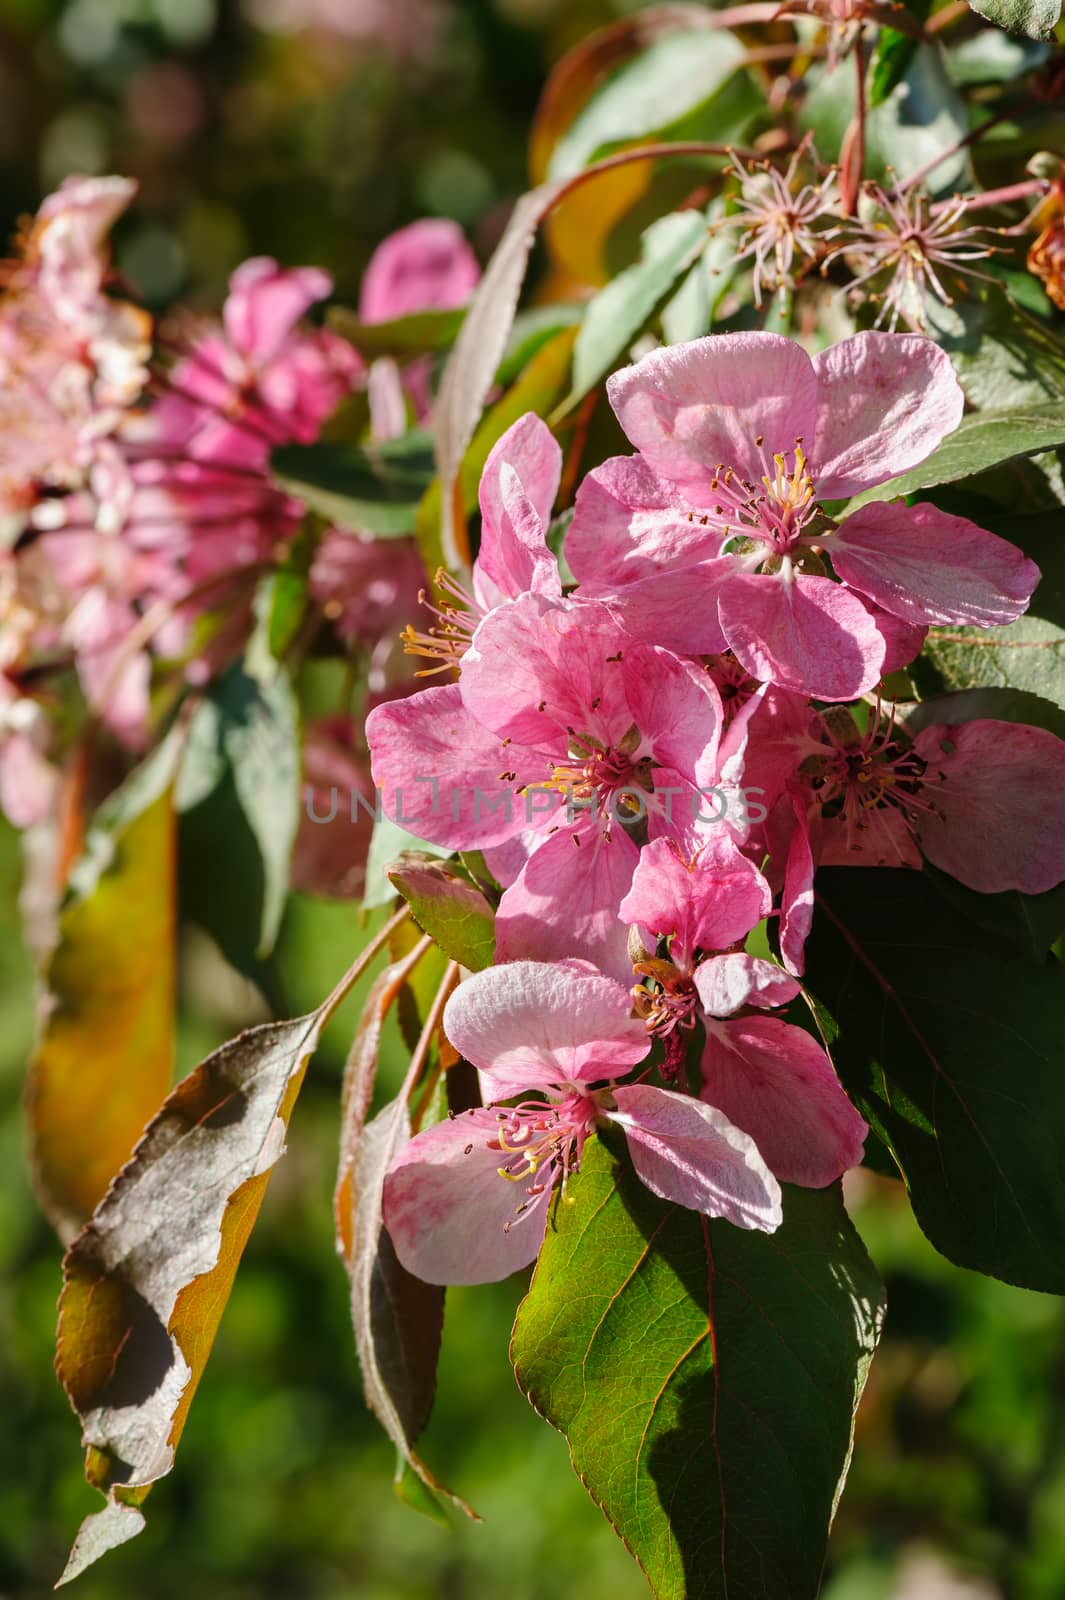 Beautiful blooming paradise apple tree flowers closeup during springtime